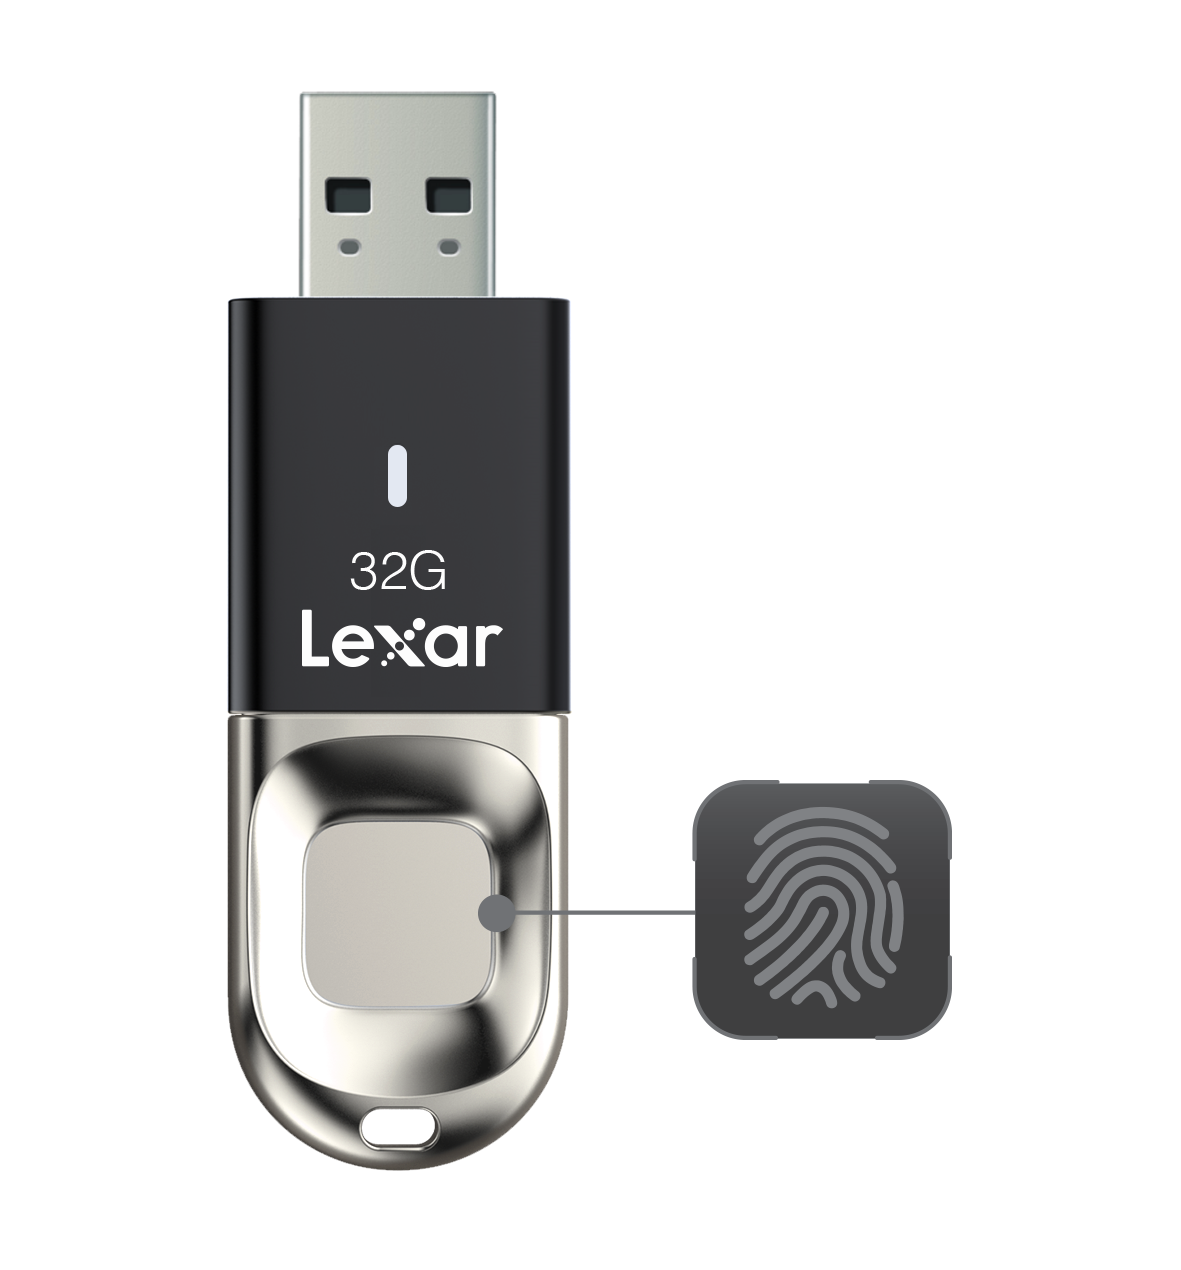 Lexar Launches Fingerprint Security JumpDrive F35 USB 3.0 in India